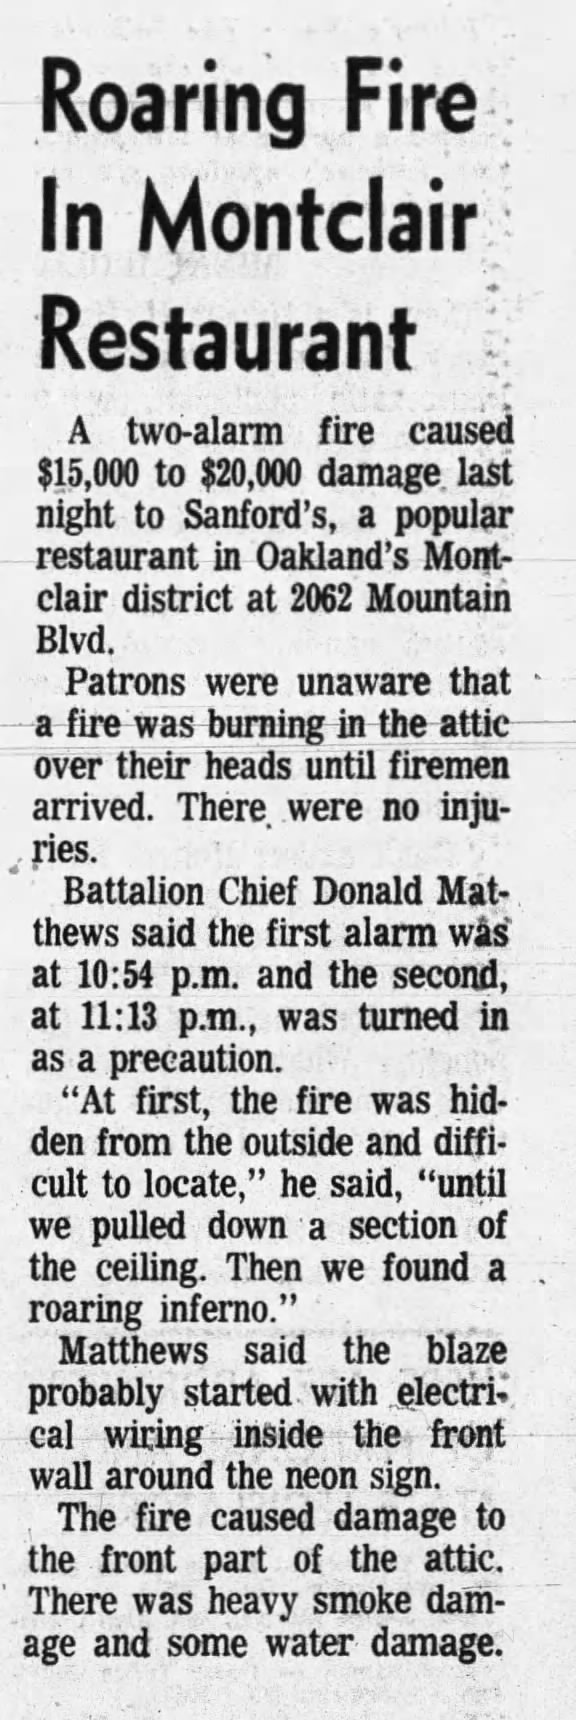 Roaring Fire in Montclair - Aug 18, 1970